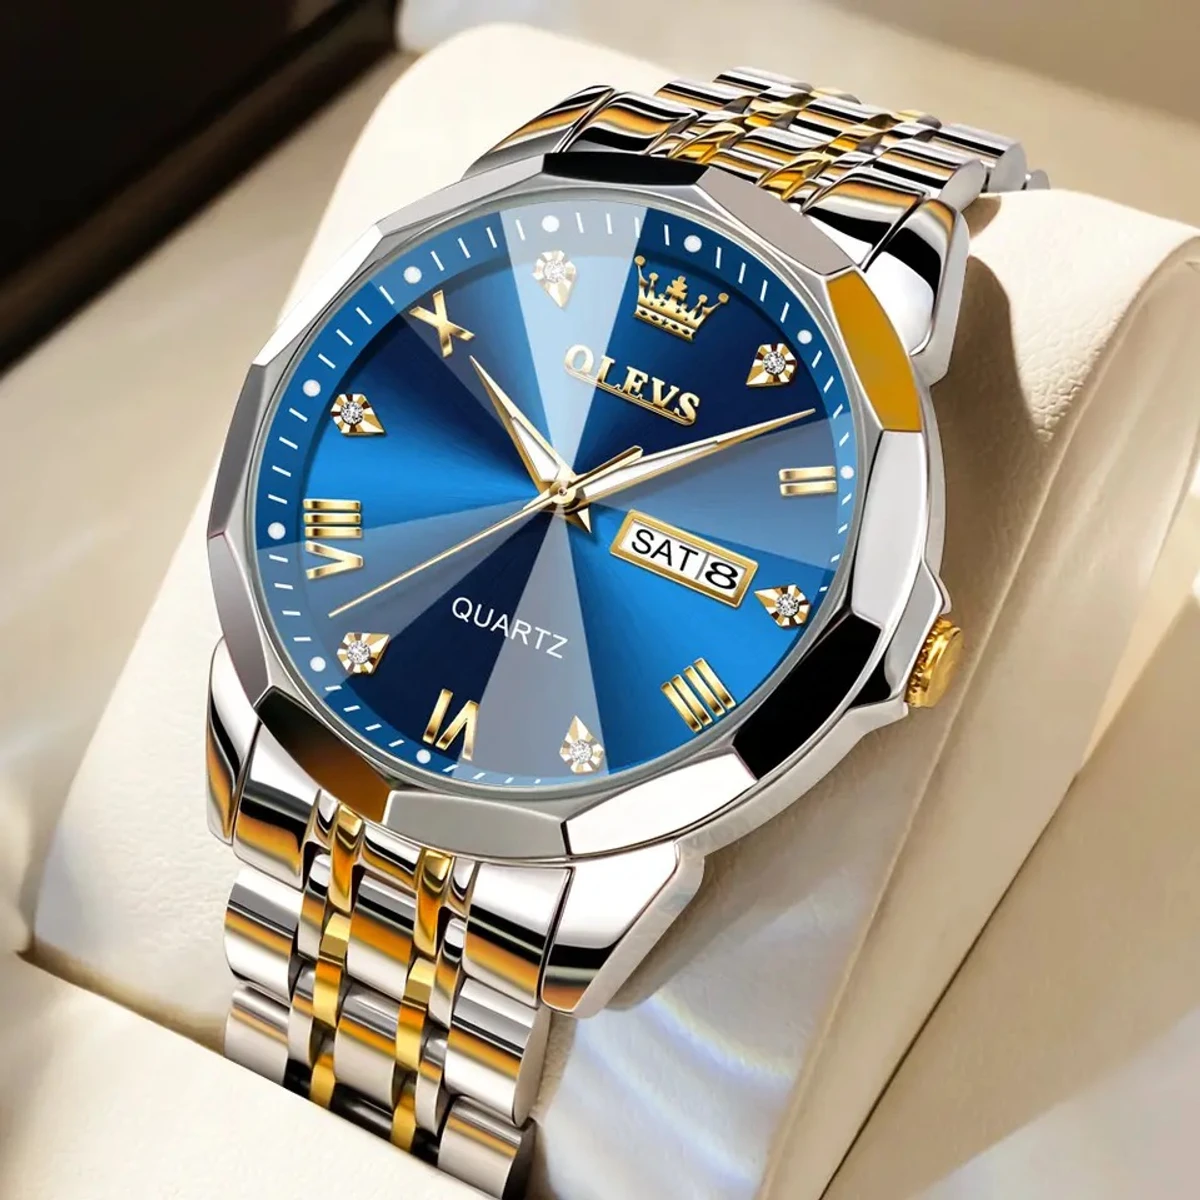 2024 New Luxury OLEVS Watch for Men Stainless Steel Waterproof Watches -  BLUE